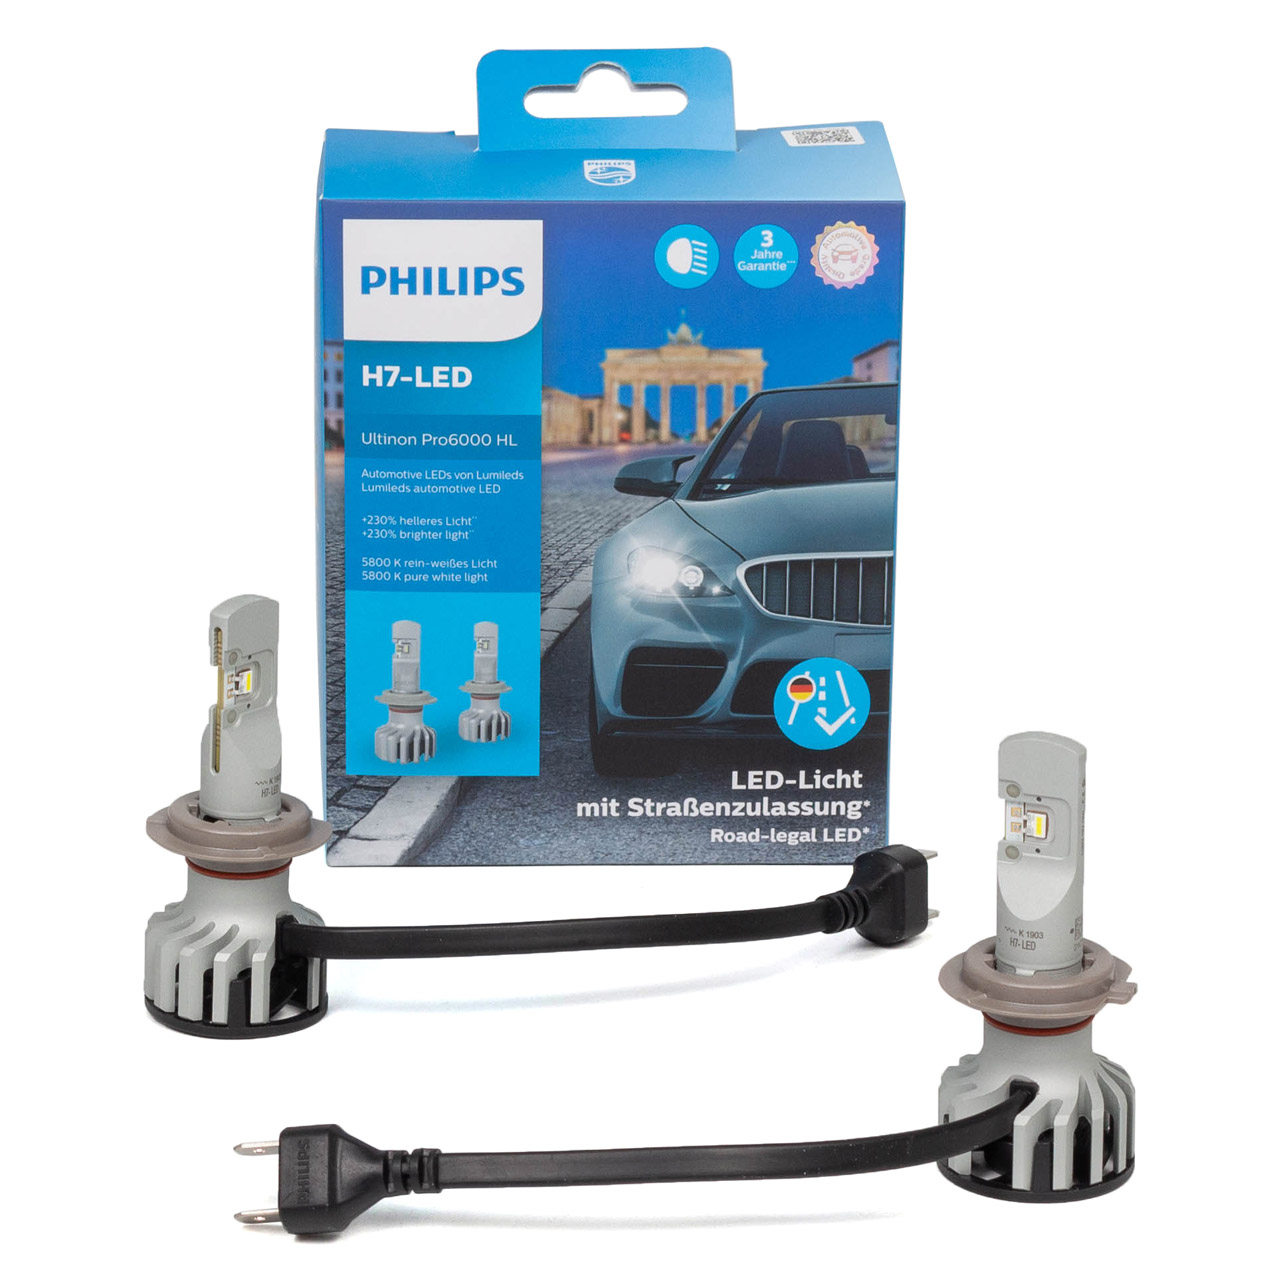 2x PHILIPS Ultinon Pro6000 HL Standard H7 LED Lampe mit Straßenzulassung  12V +220% 5.800K 